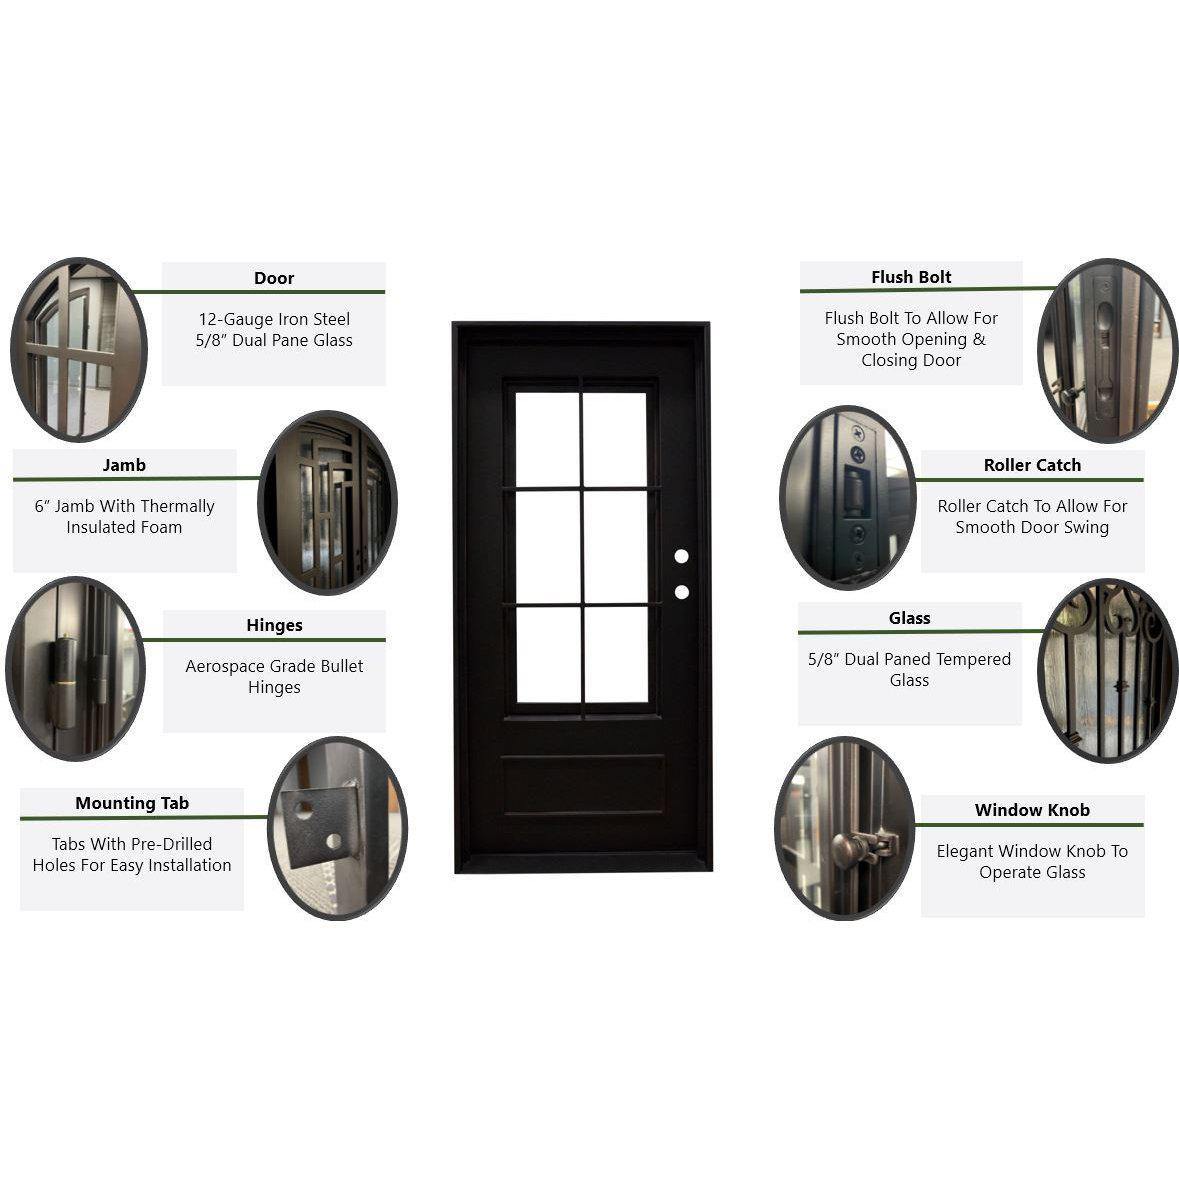 Pre-Order Austin-Wrought Iron Doors-Black Diamond Iron Doors